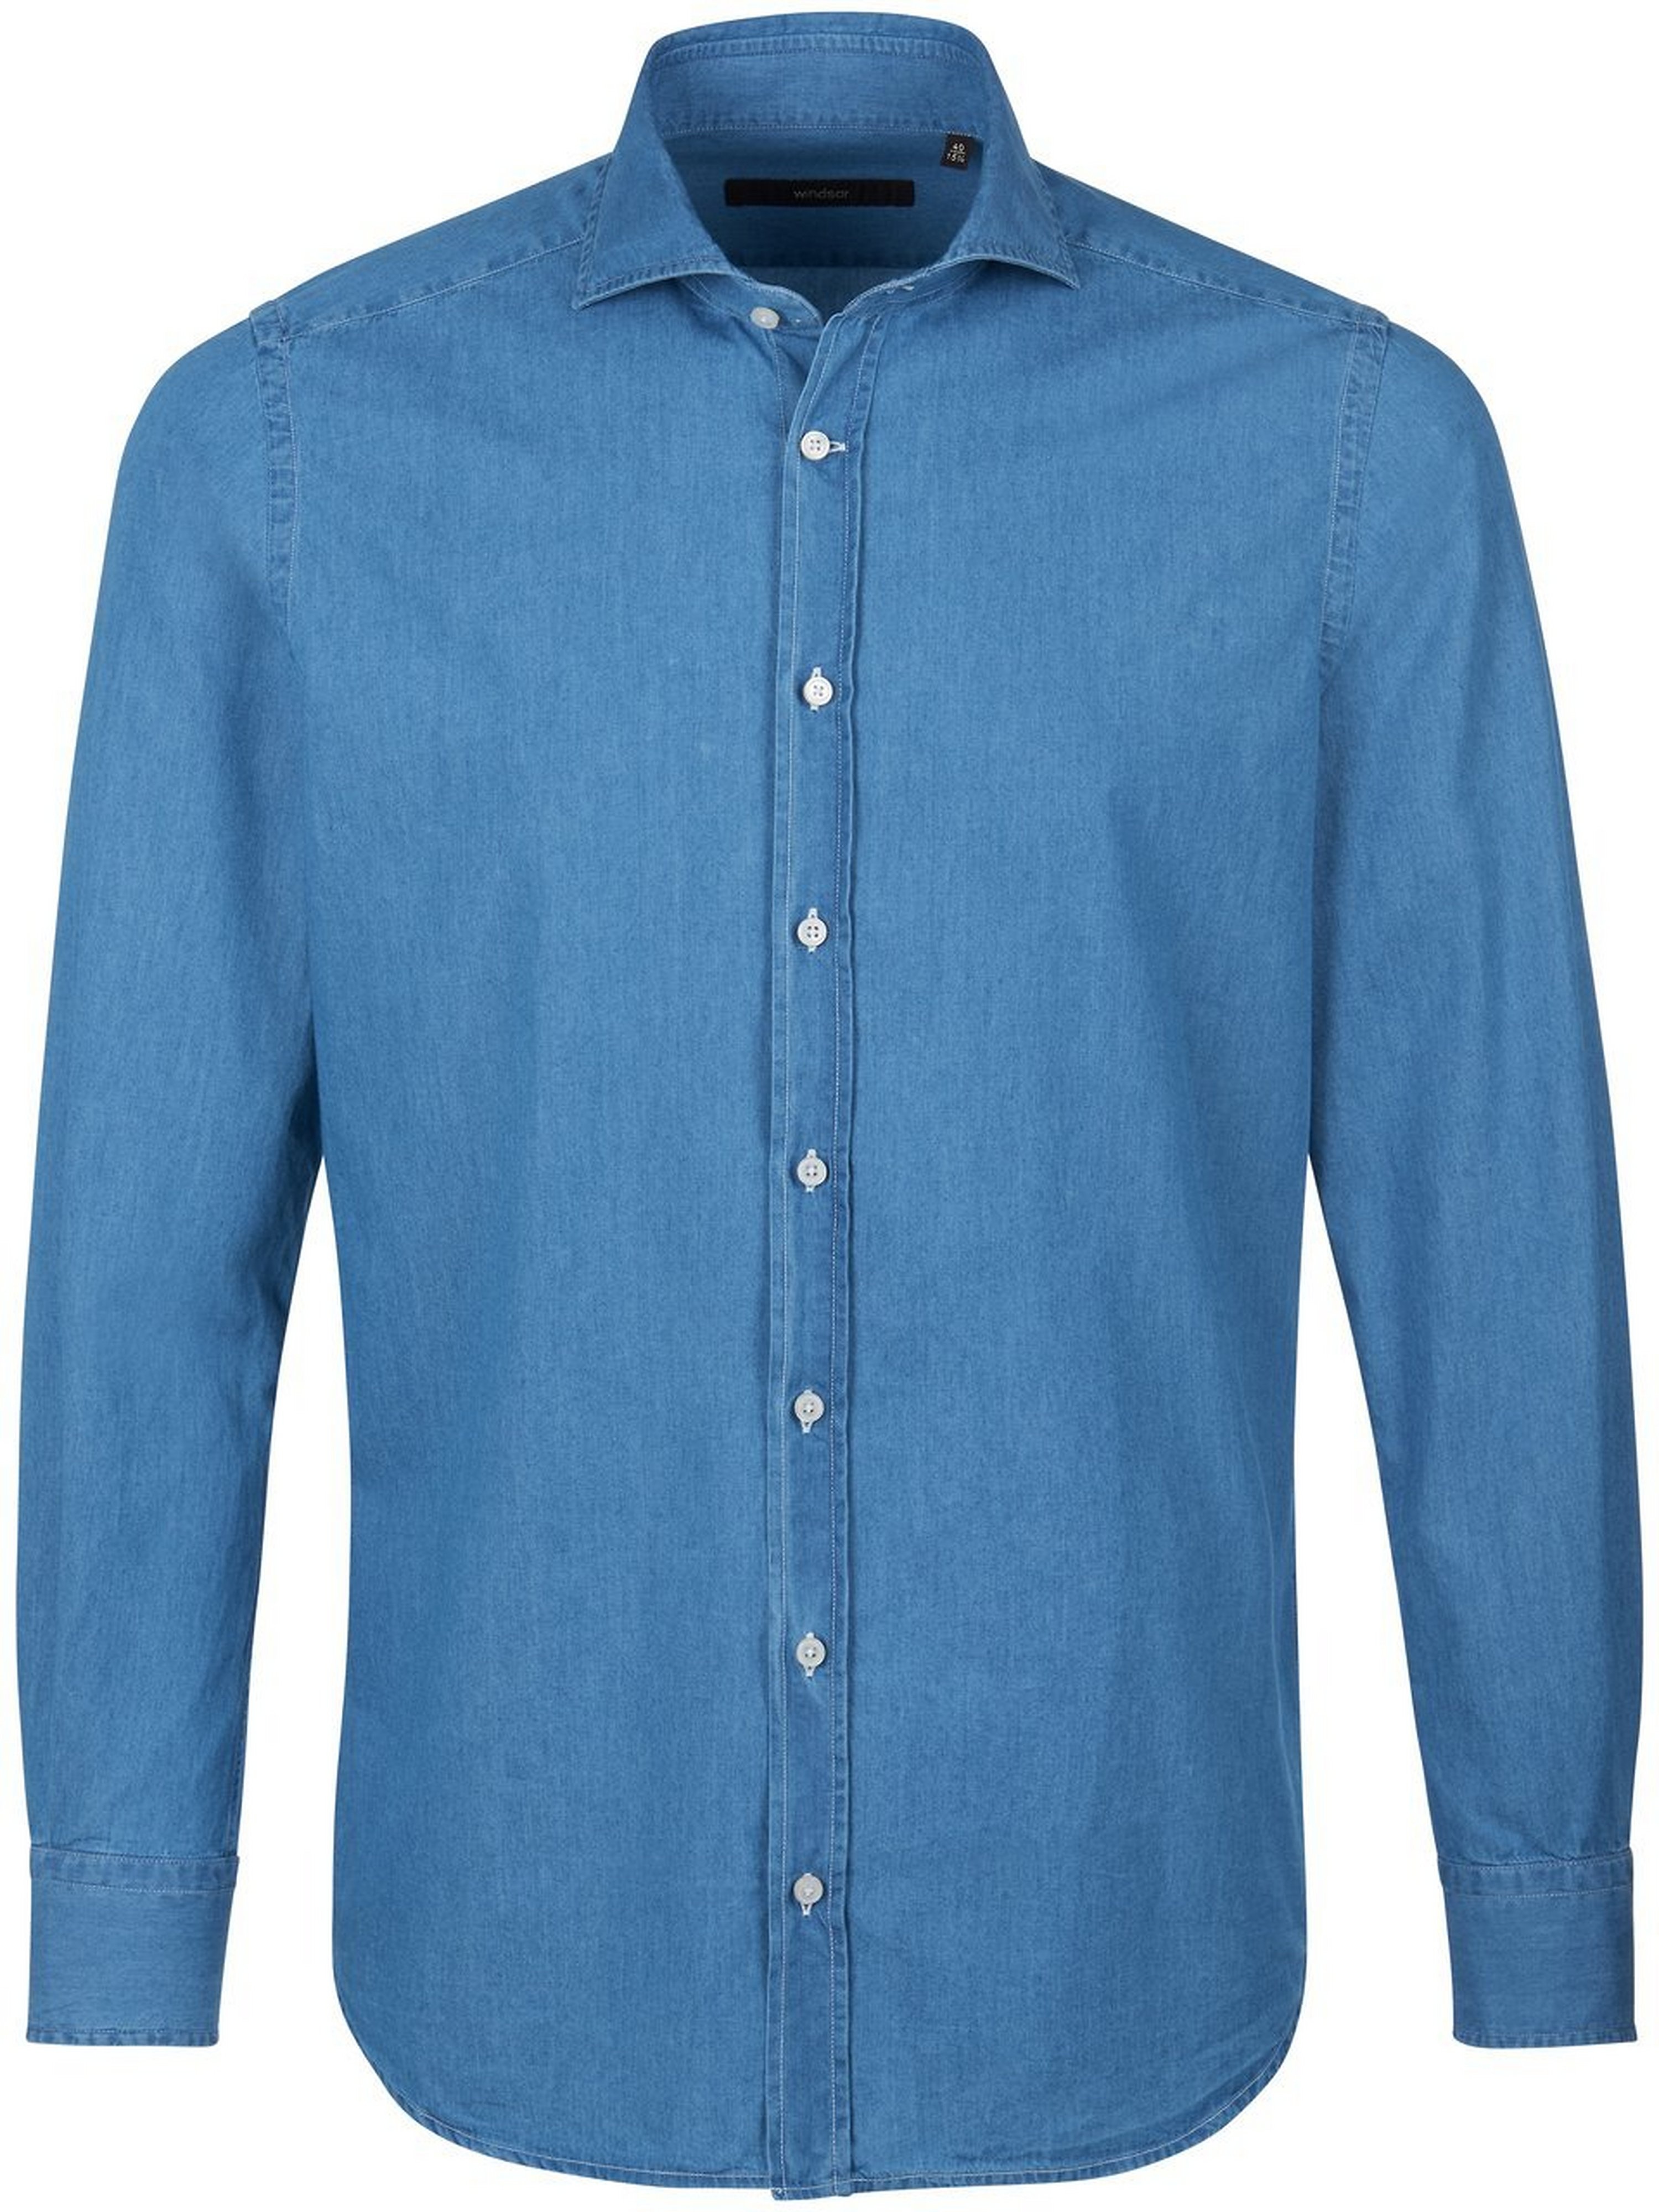 La chemise  Windsor bleu